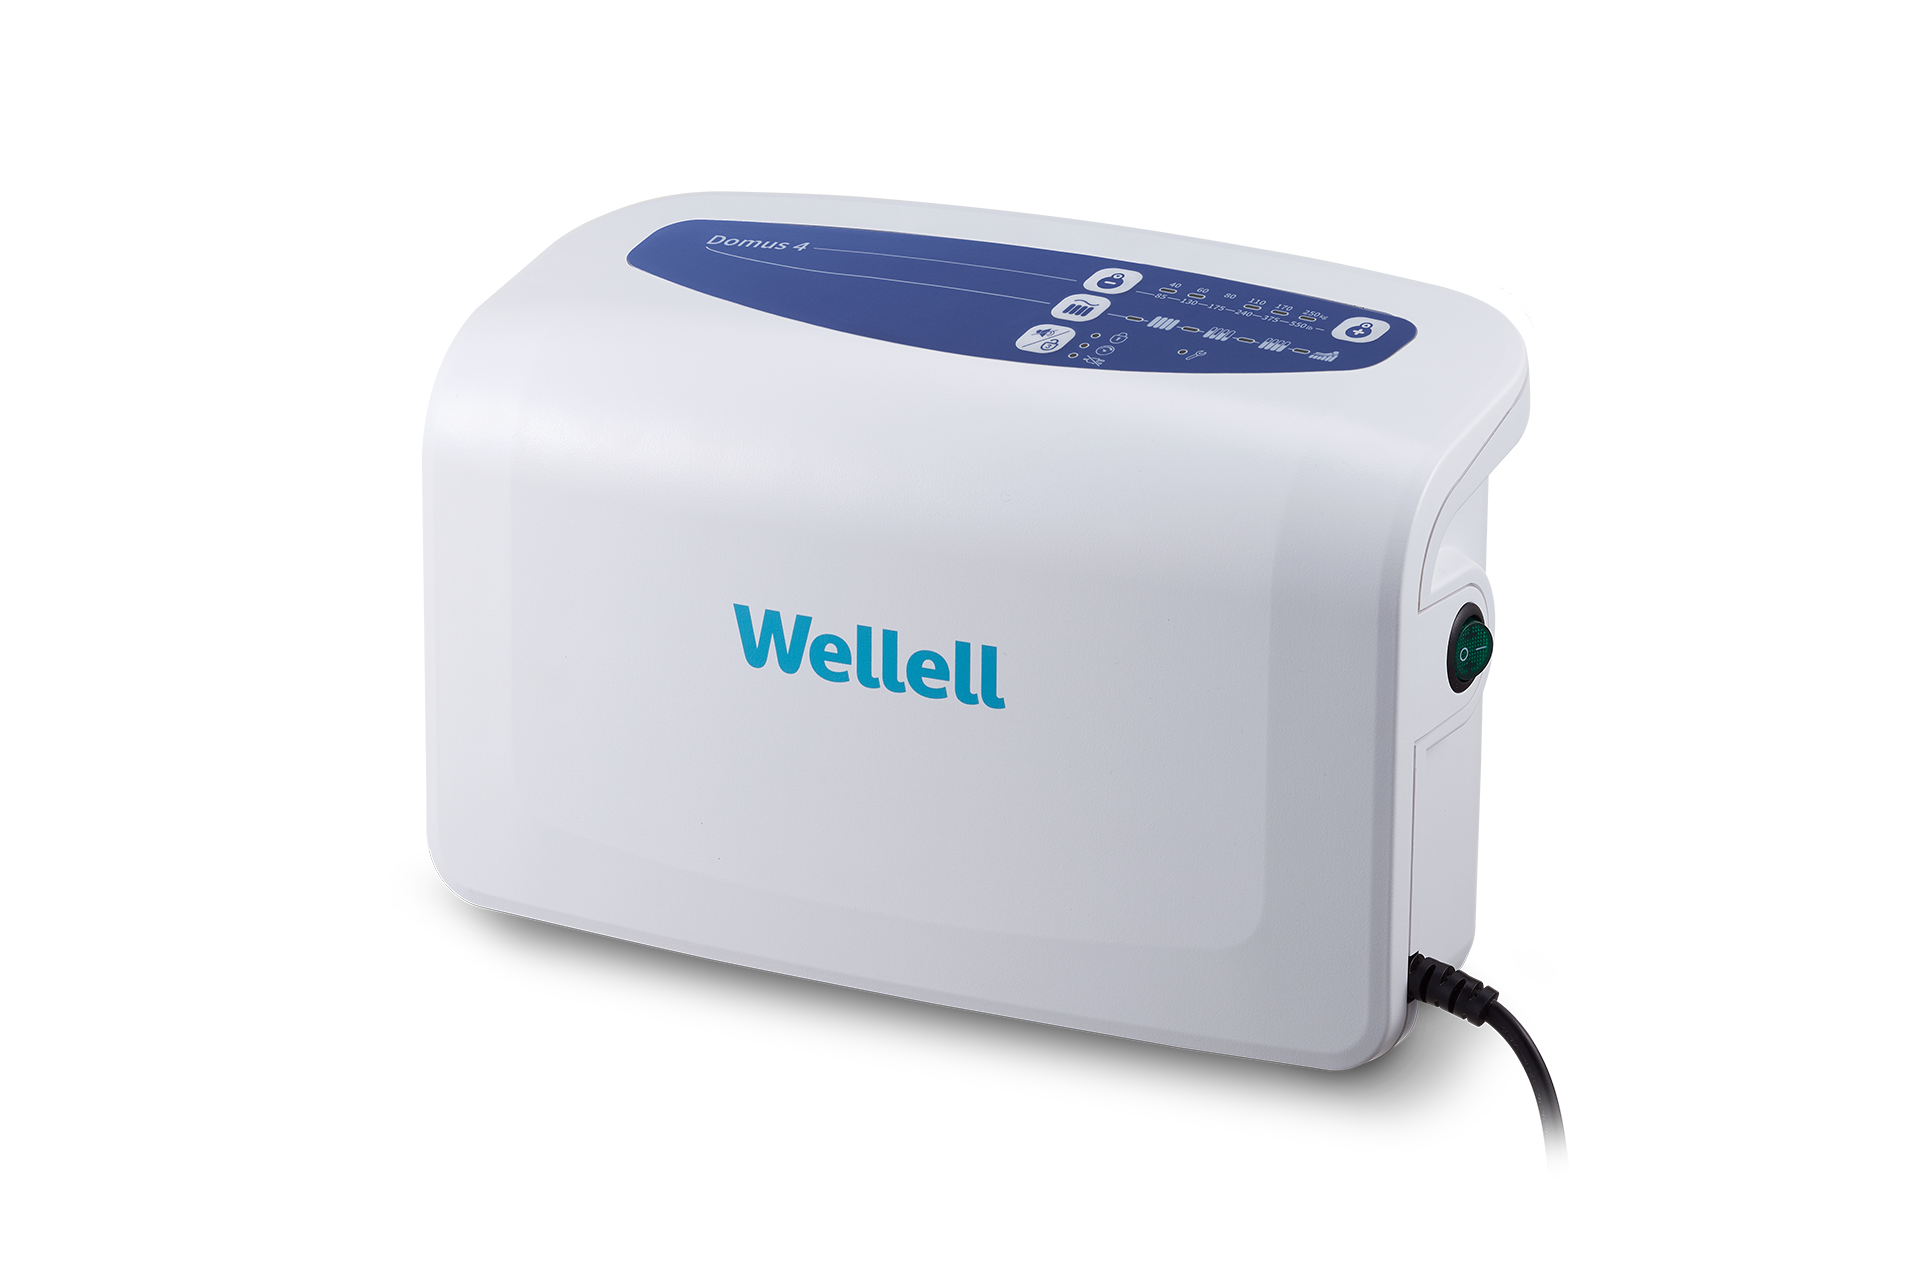 Domus 4 - pressure relief care -Wellell